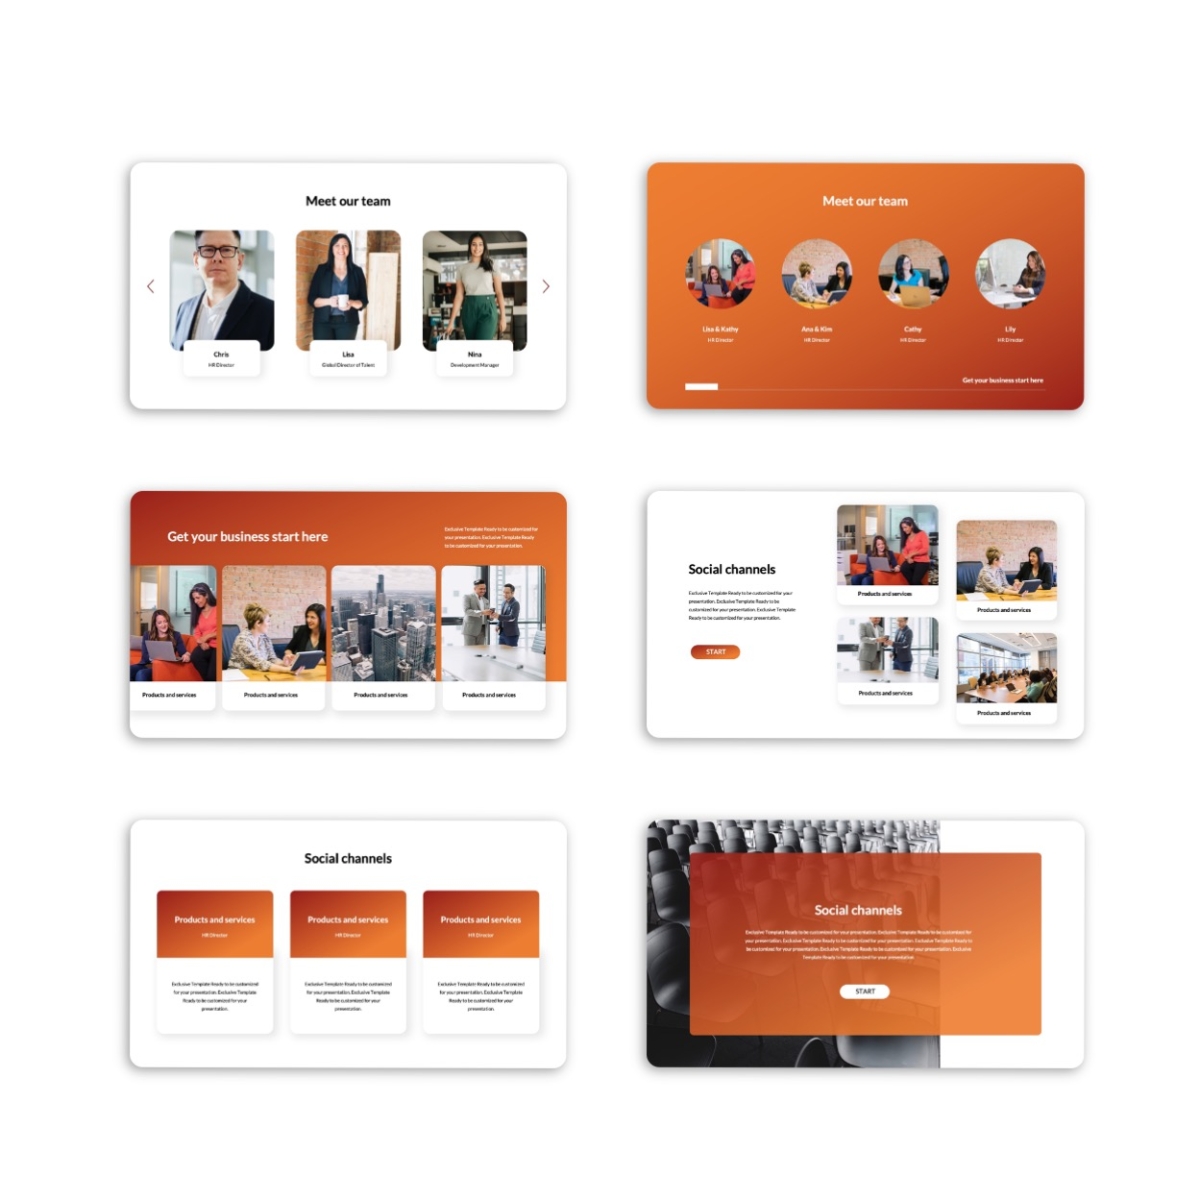 Creative Powerful Business Design PowerPoint Template